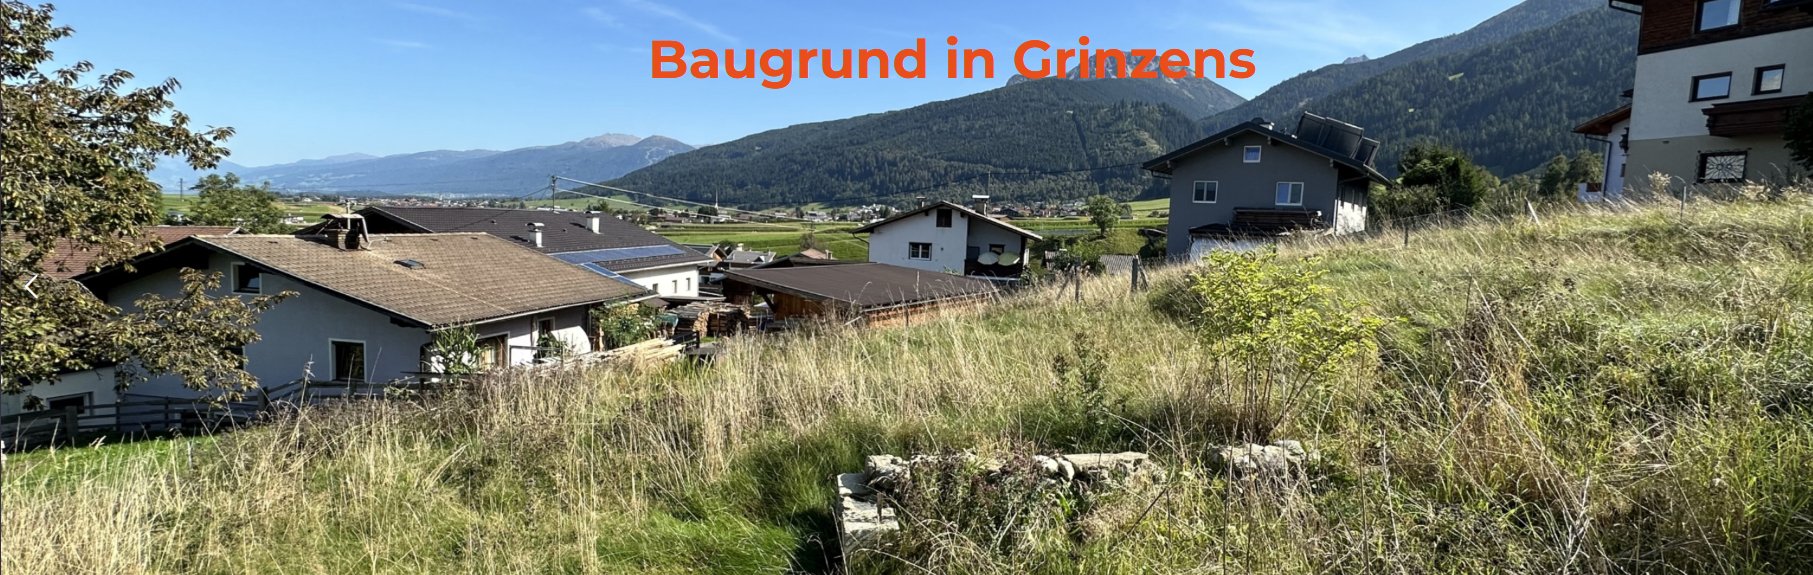 Image plot of land for sale Baugrund in Grinzenzs